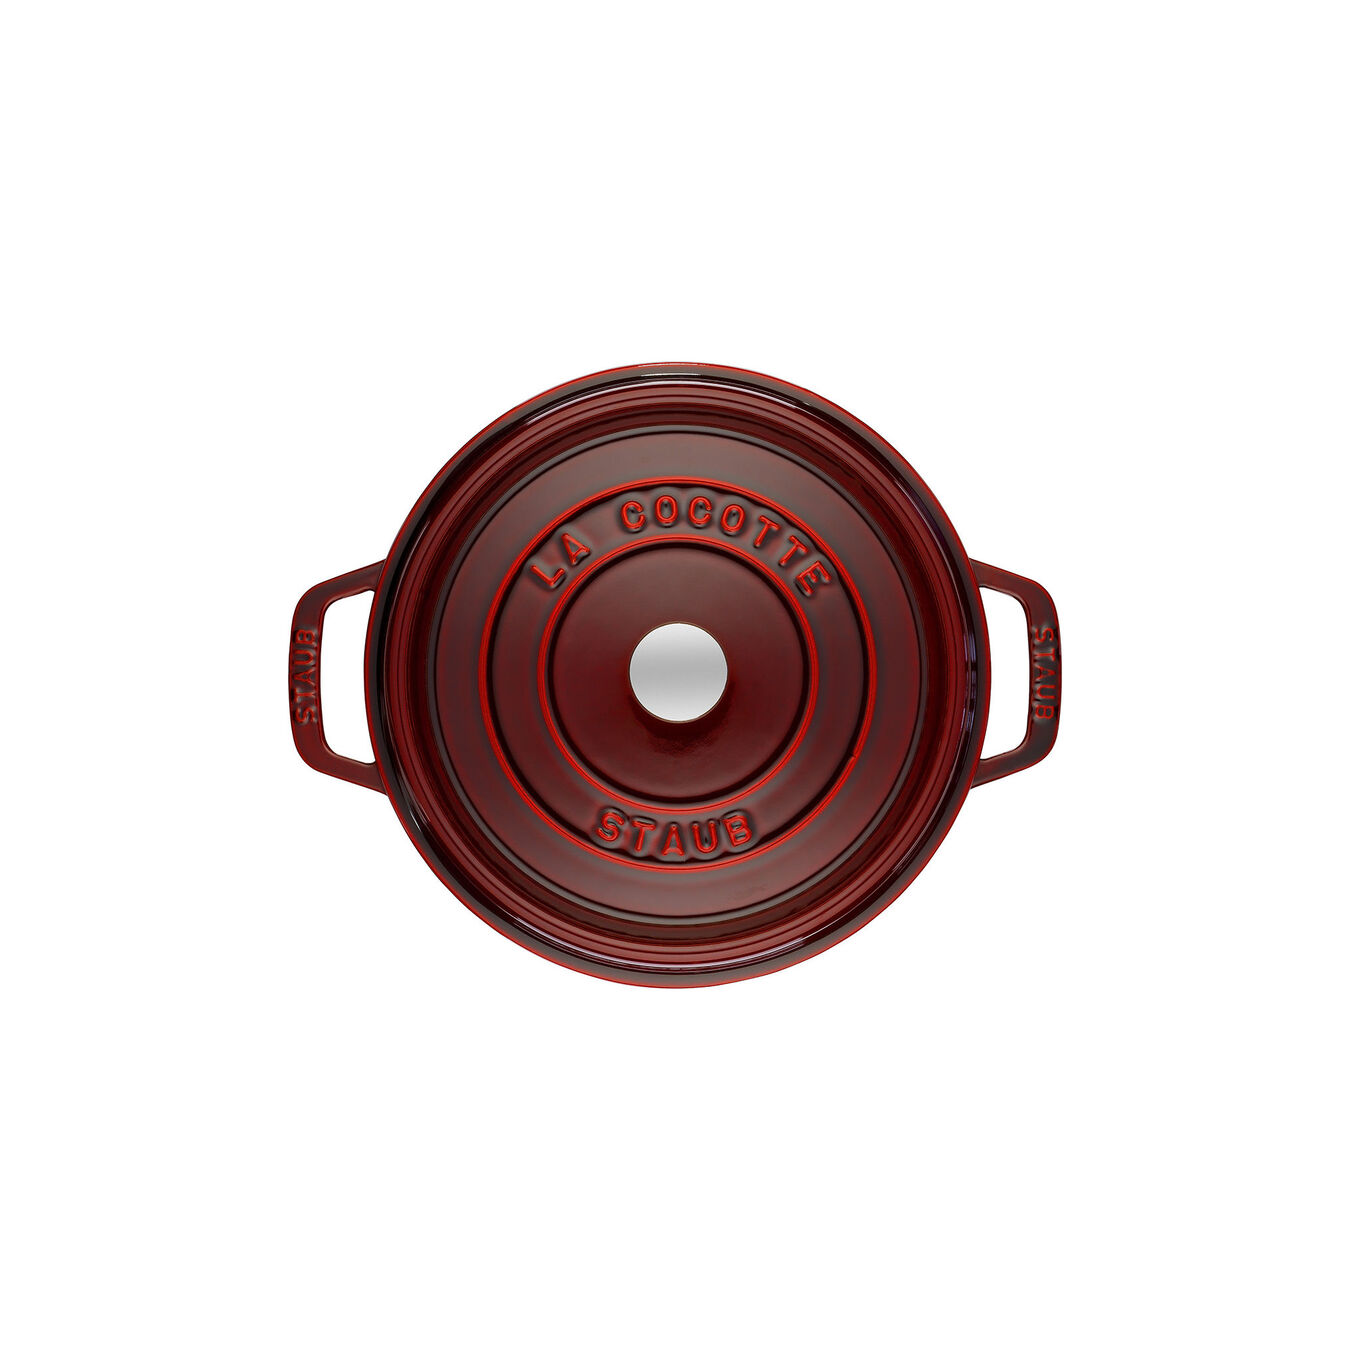 22 cm round Cast iron Cocotte grenadine-red,,large 2